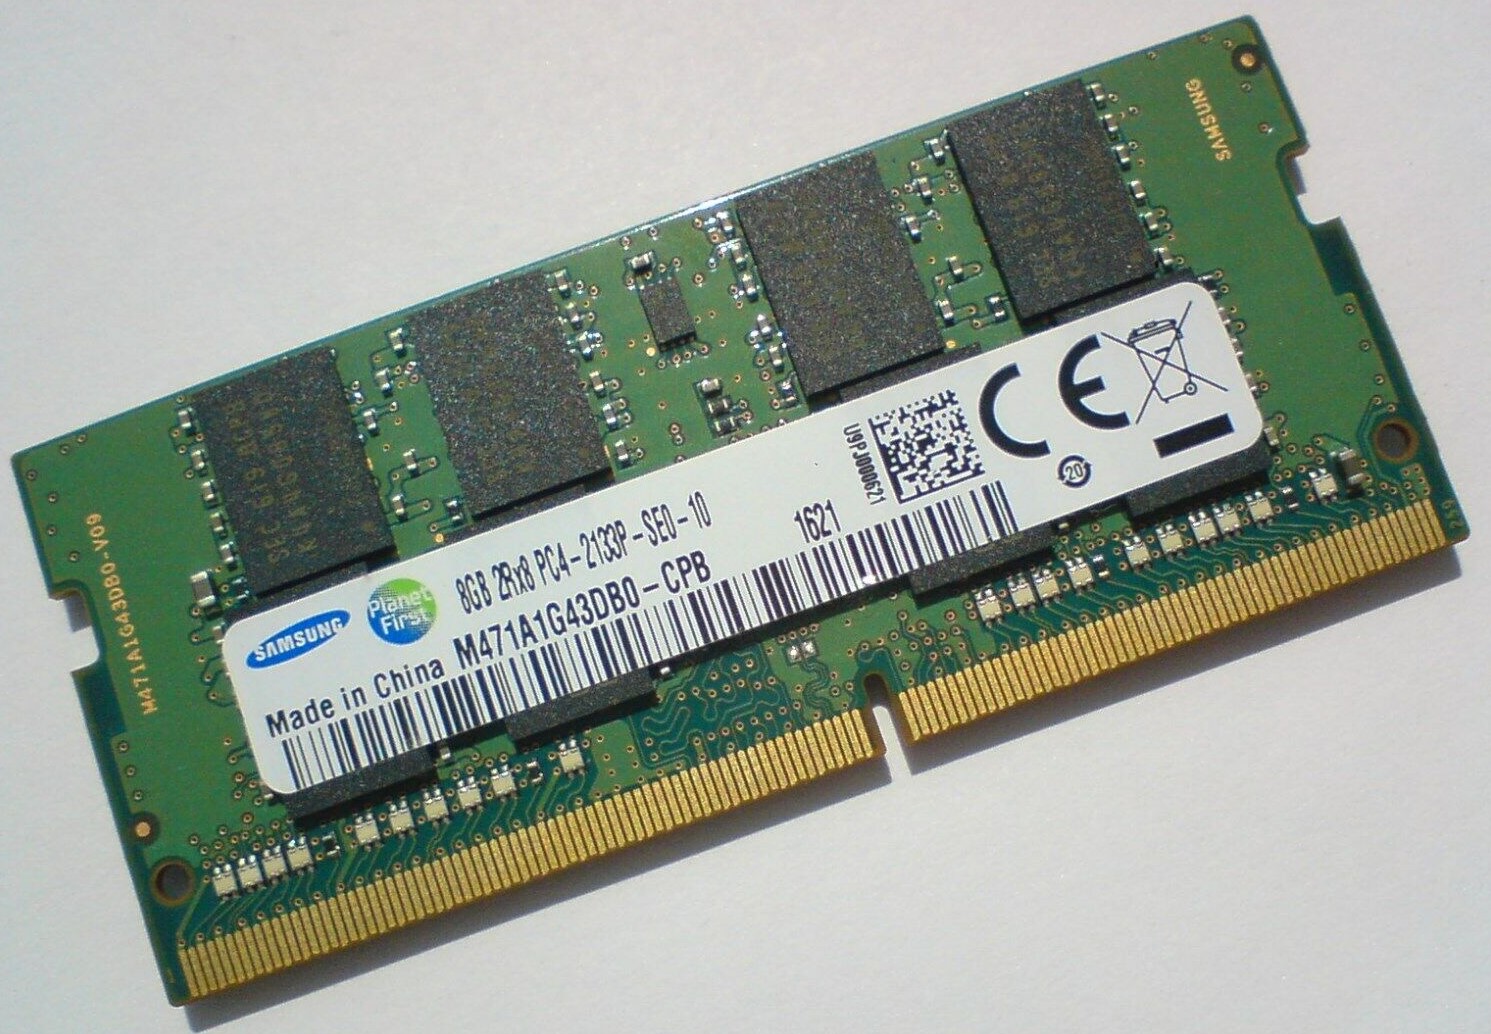 MEMORIA RAM SODIMM SAMSUNG DDR4-2133 8GB/512MX64 CL15 M471A1G43DB0-CPB